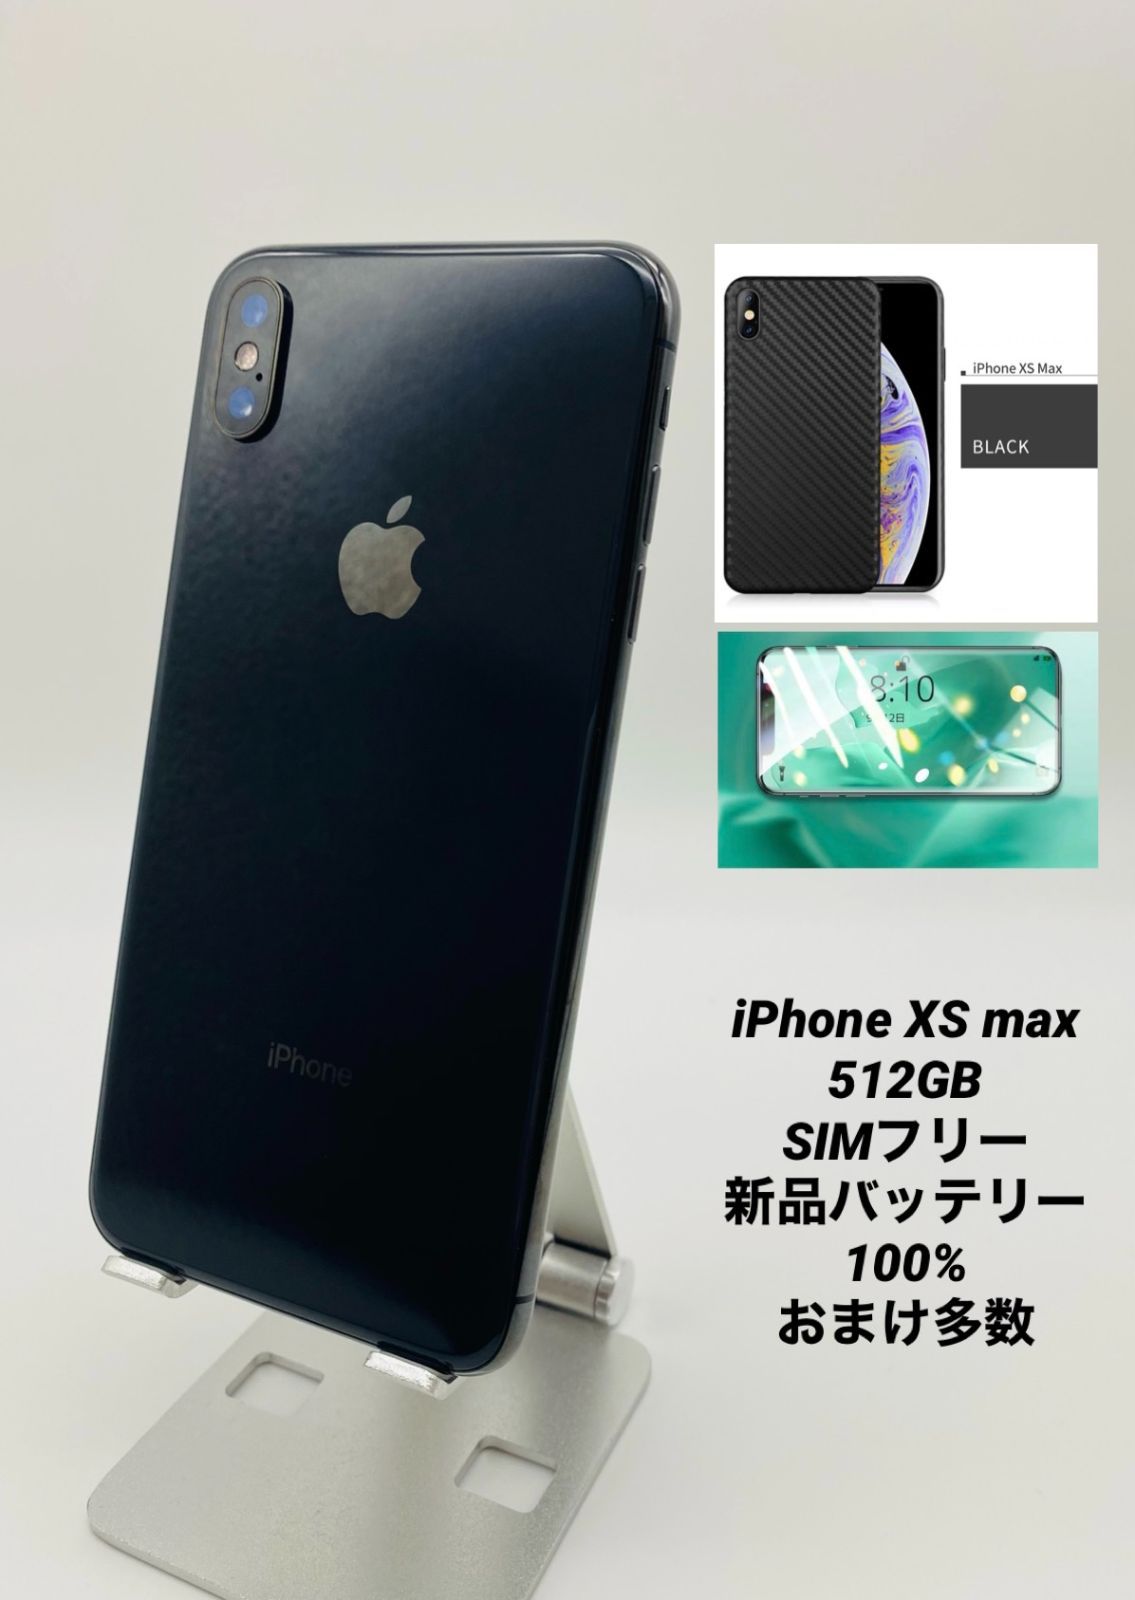 IPHONE XSMAX 512 GB SIM フリーiphonex - スマートフォン本体